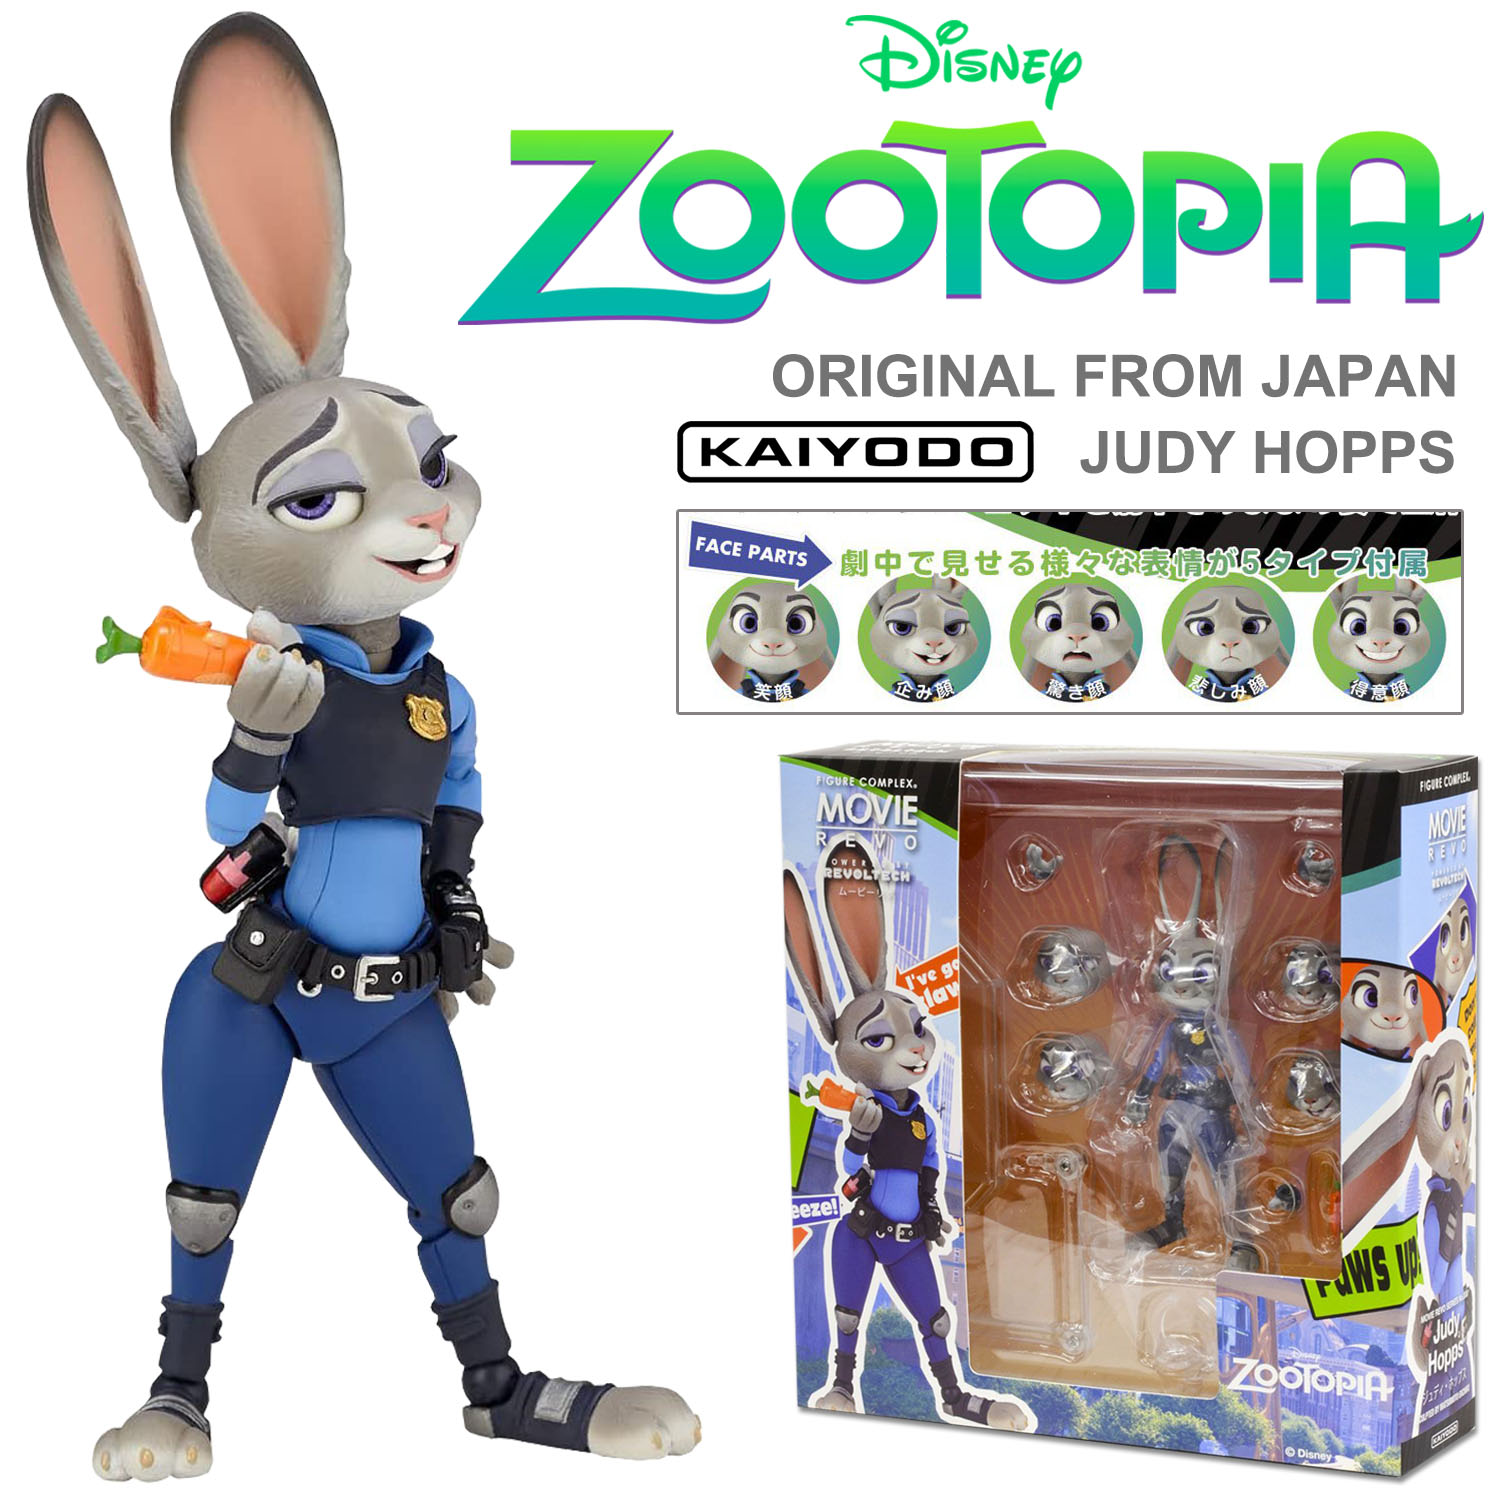 Model โมเดล ของแท้ 100% Kaiyodo จากหนังดังเรื่อง Zootopia ซูโทเปีย นครสัตว์มหาสนุก Complex Movie Revo Series Judy Hopps จูดี้ ฮอปส์ Ver Original from Japan Figma ฟิกม่า Anime ขยับแขน-ขาได้ ของขวัญ อนิเมะ การ์ตูน มังงะ Doll ตุ๊กตา manga Figure ฟิกเกอร์